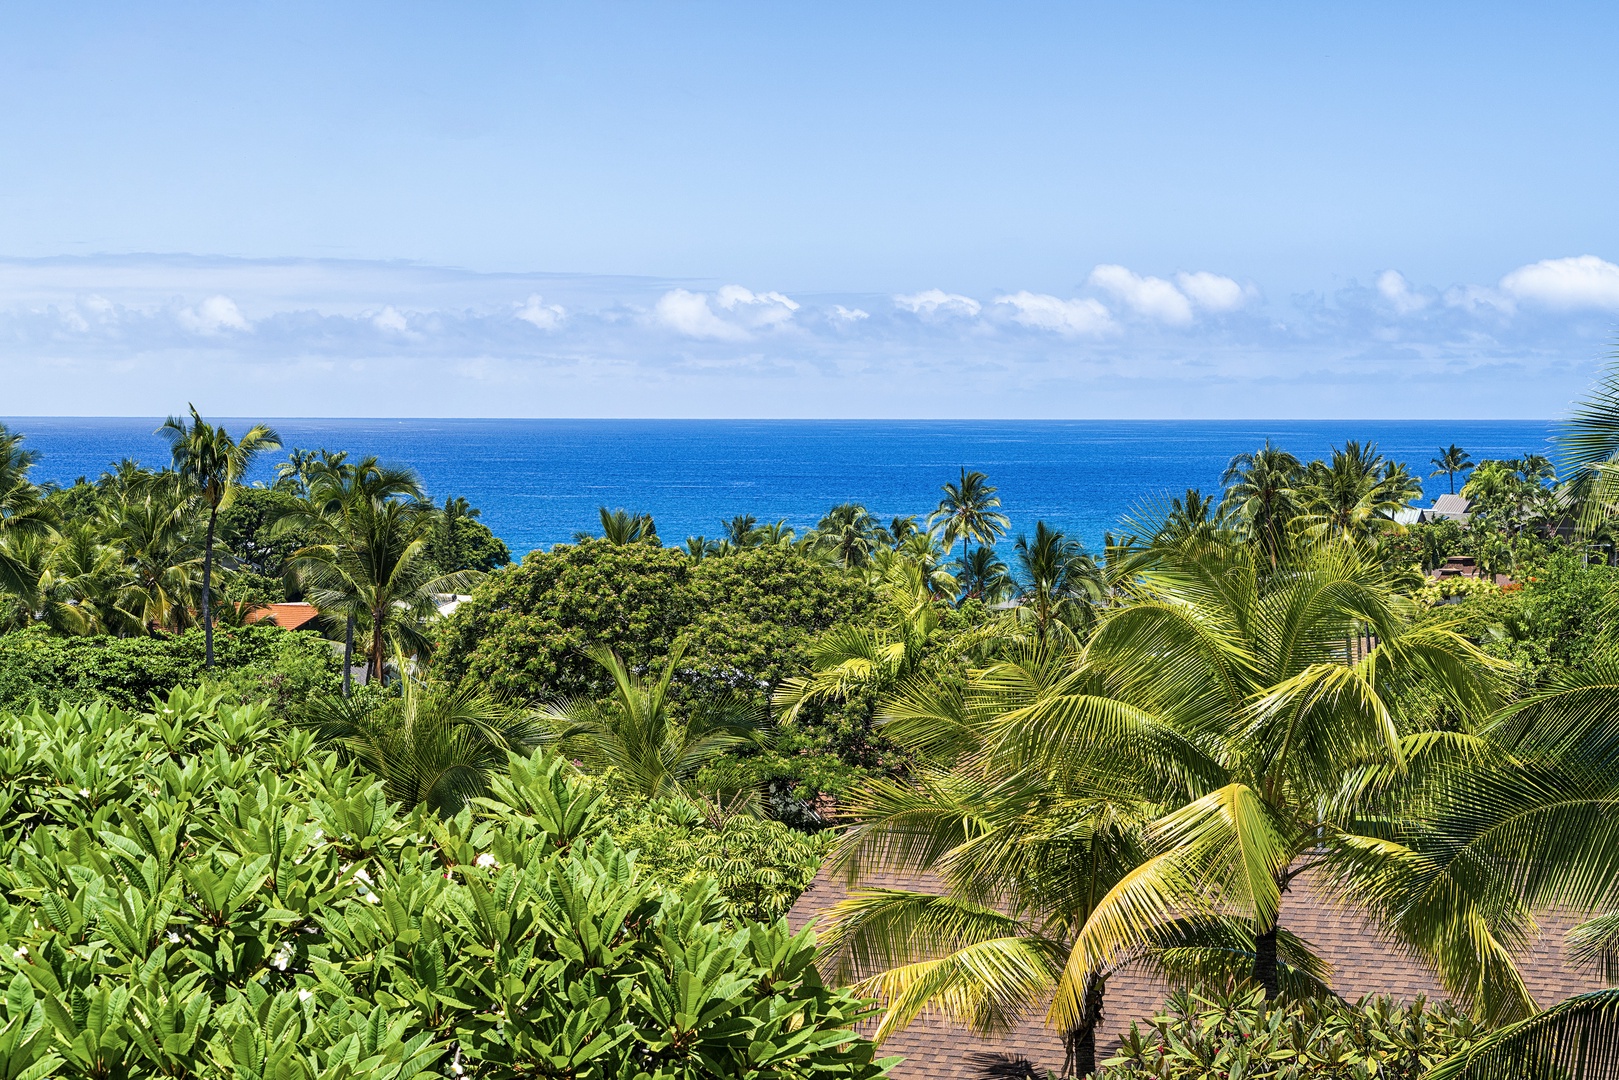 Kailua Kona Vacation Rentals, Keauhou Resort 113 - Gorgeous coastline views as far as the eye can see!